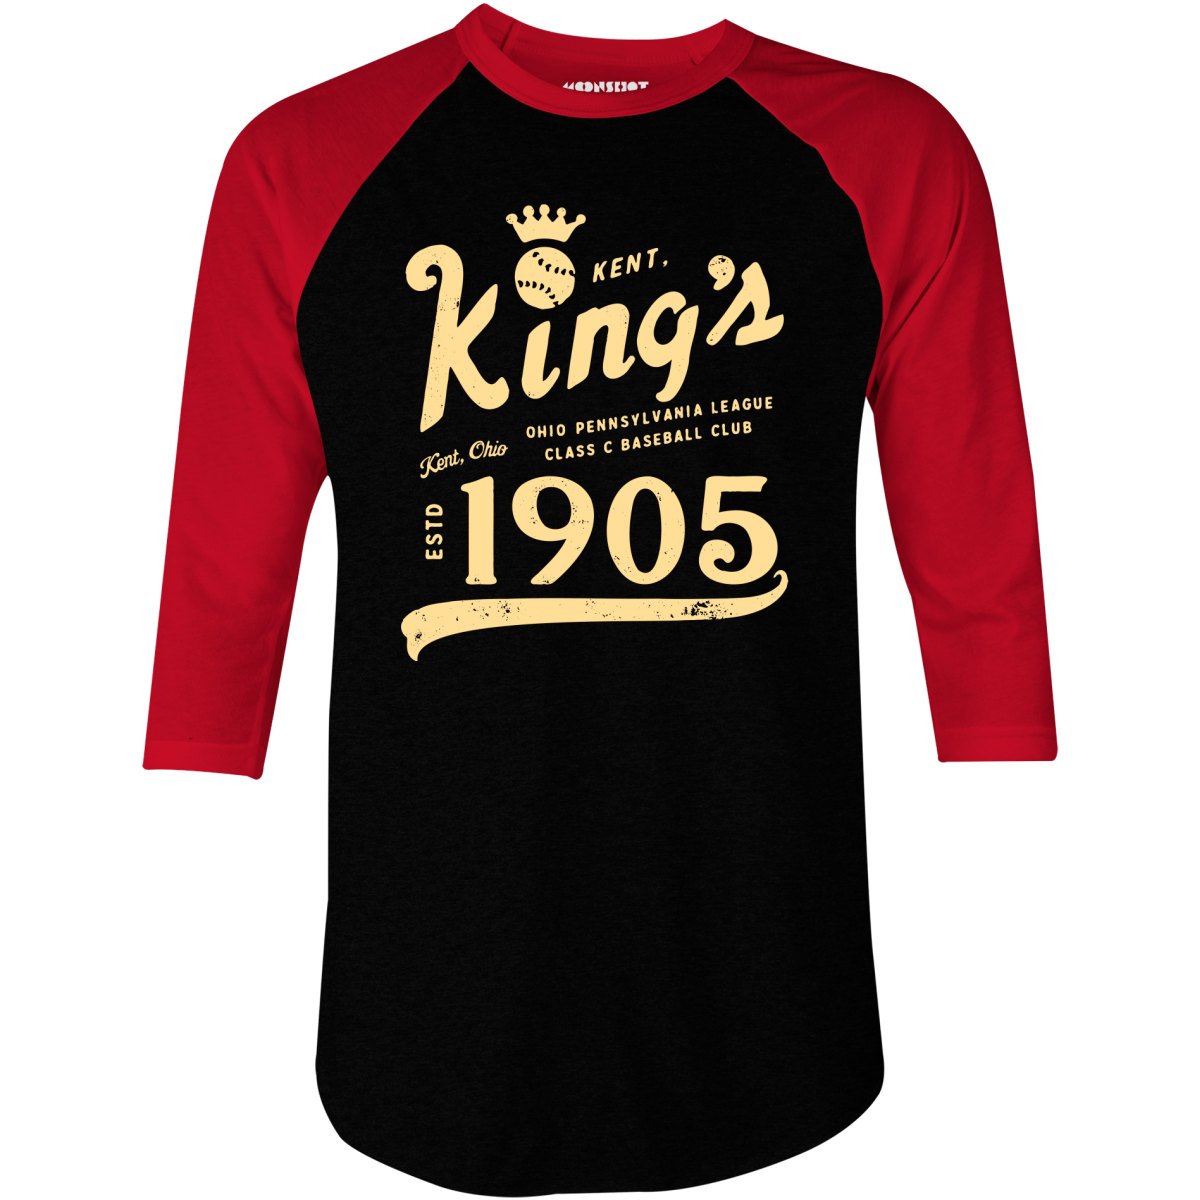 Kent Kings - Ohio - Vintage Defunct Baseball Teams - 3/4 Sleeve Raglan T-Shirt